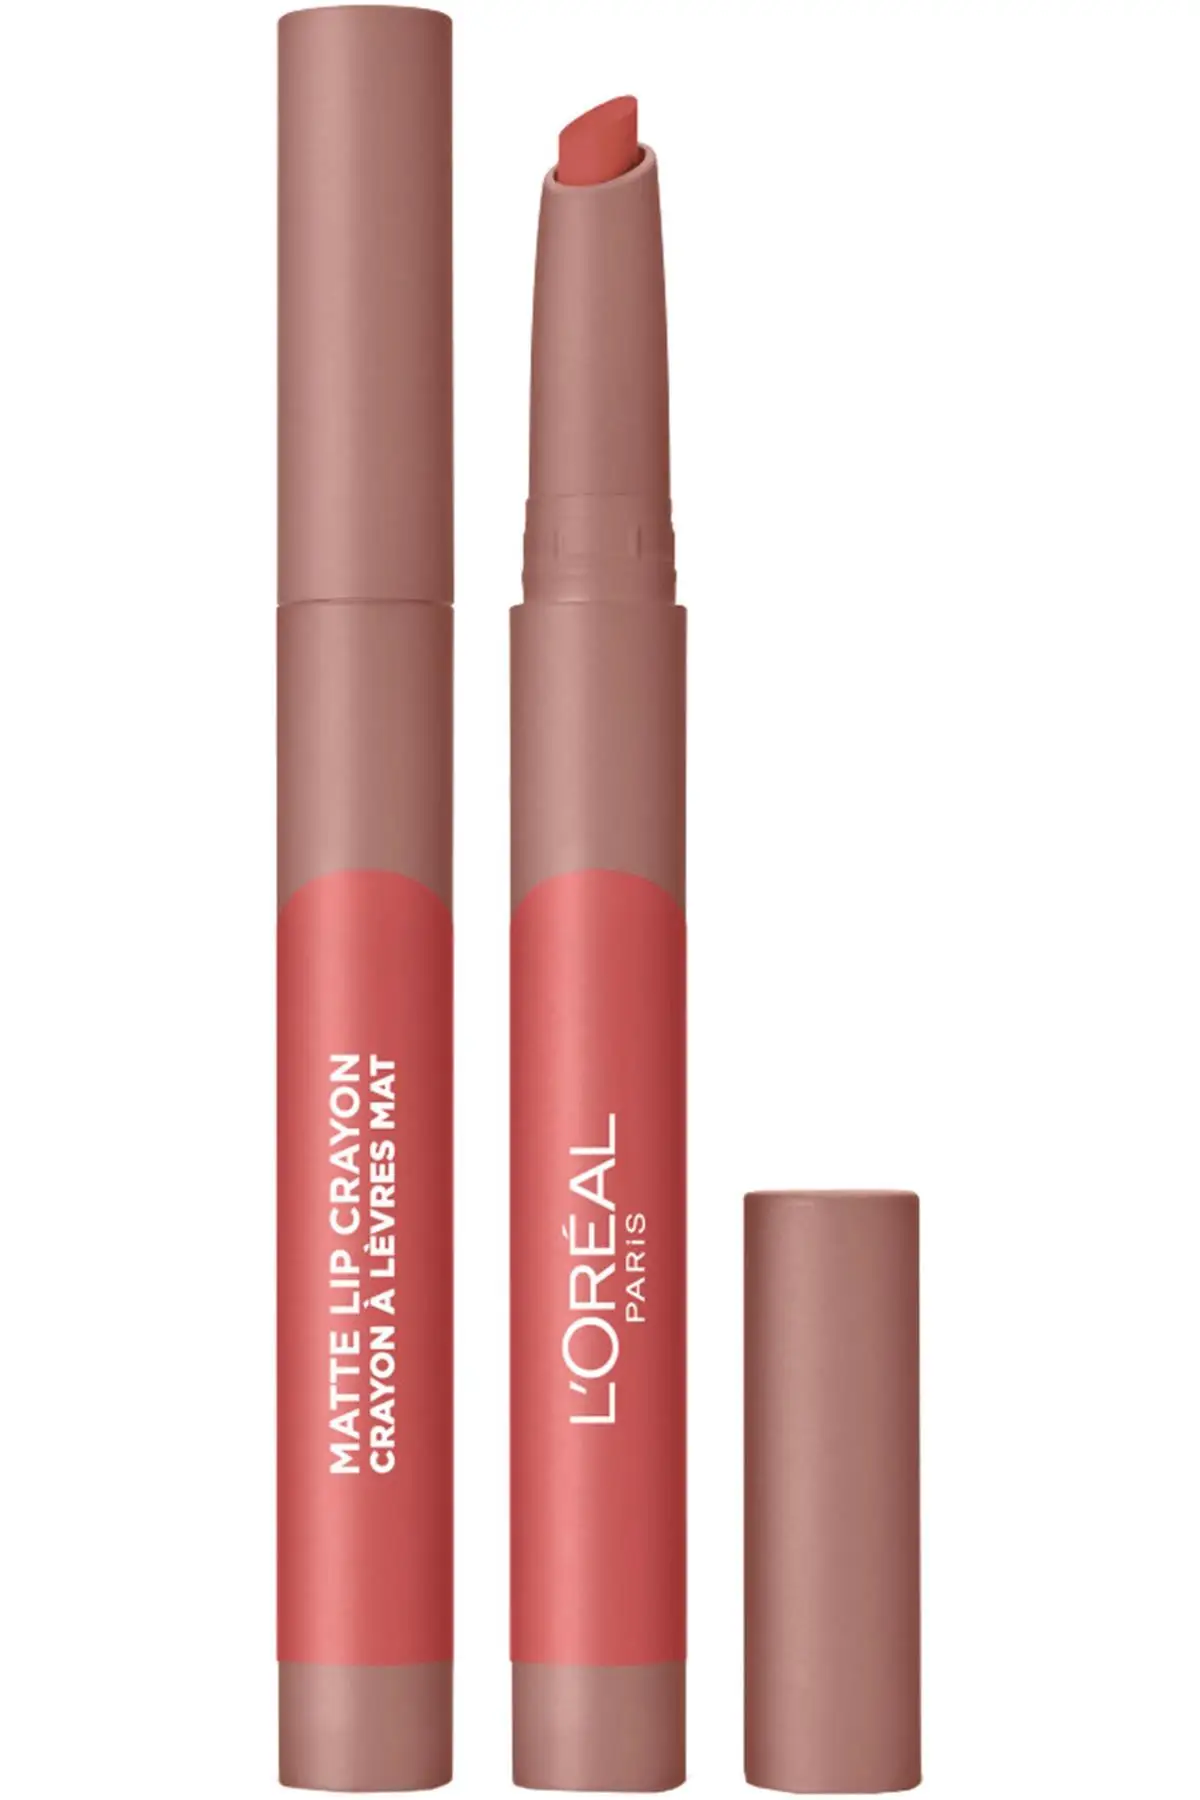 

Brand: L'Oreal Paris Infaillible Crayon Pen Lipstick No: 105 Category: Lipstick